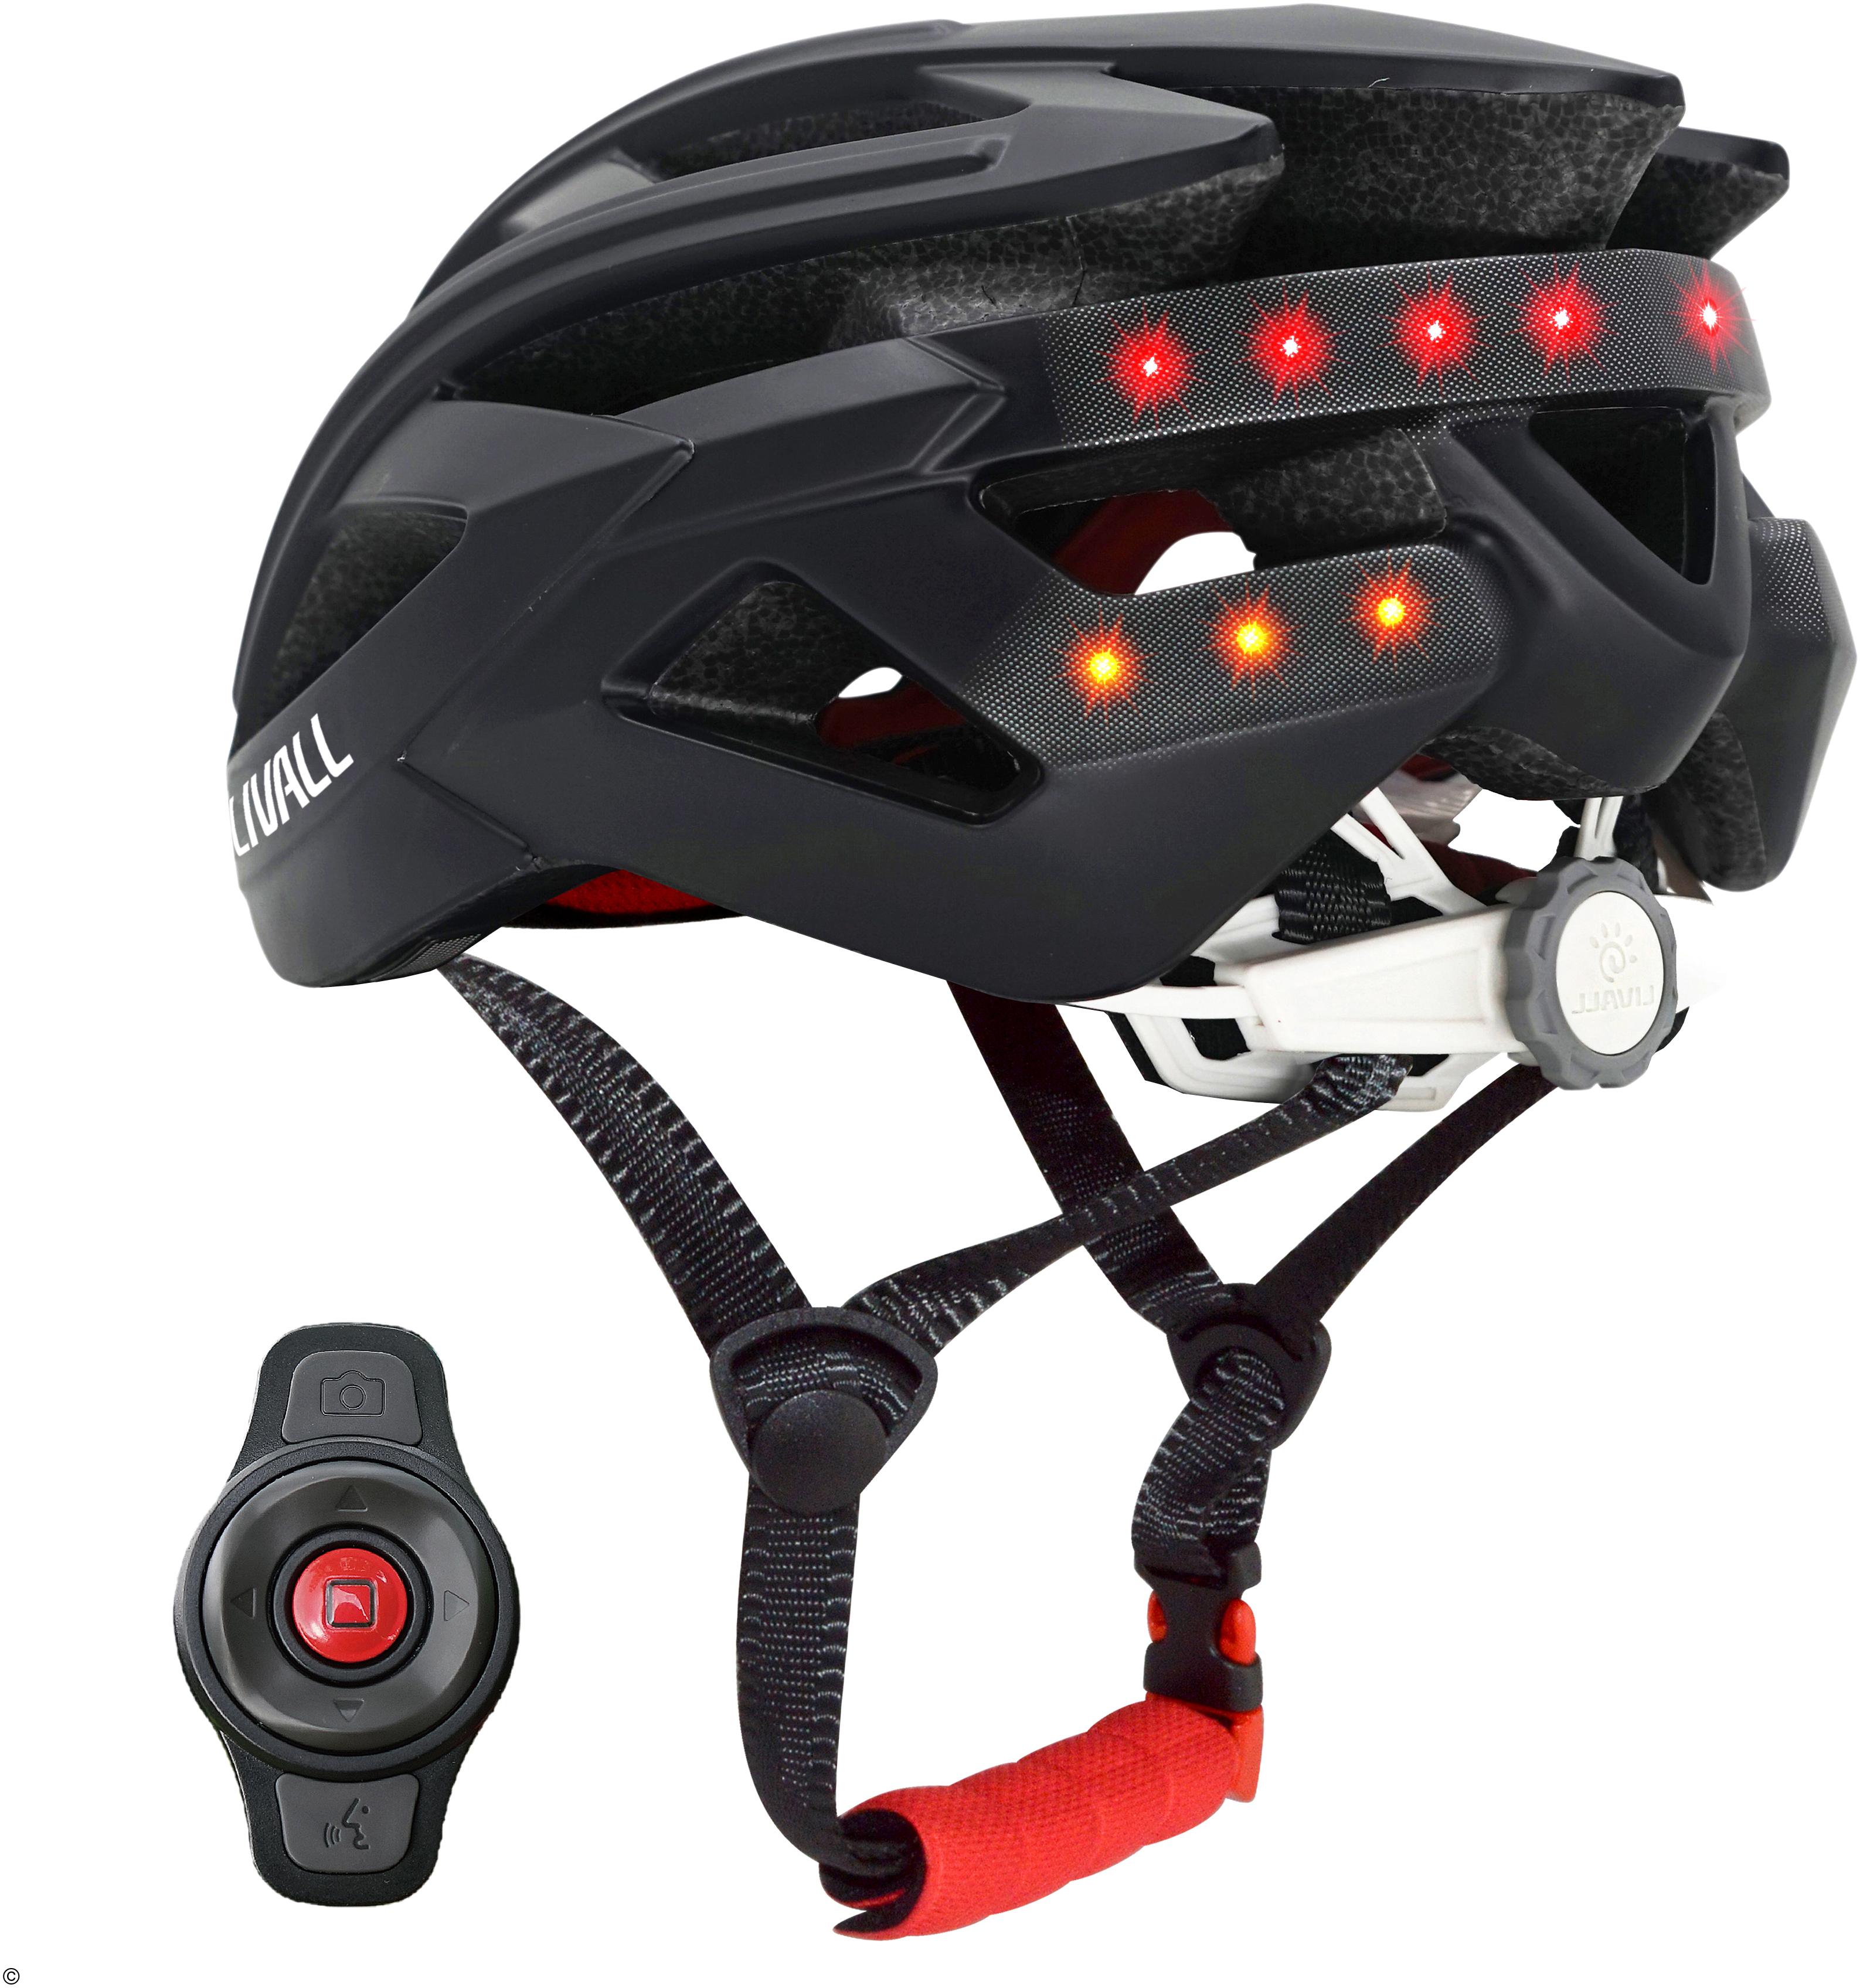 Livall Bh60Se Bluetooth Enabled Smart Helmet